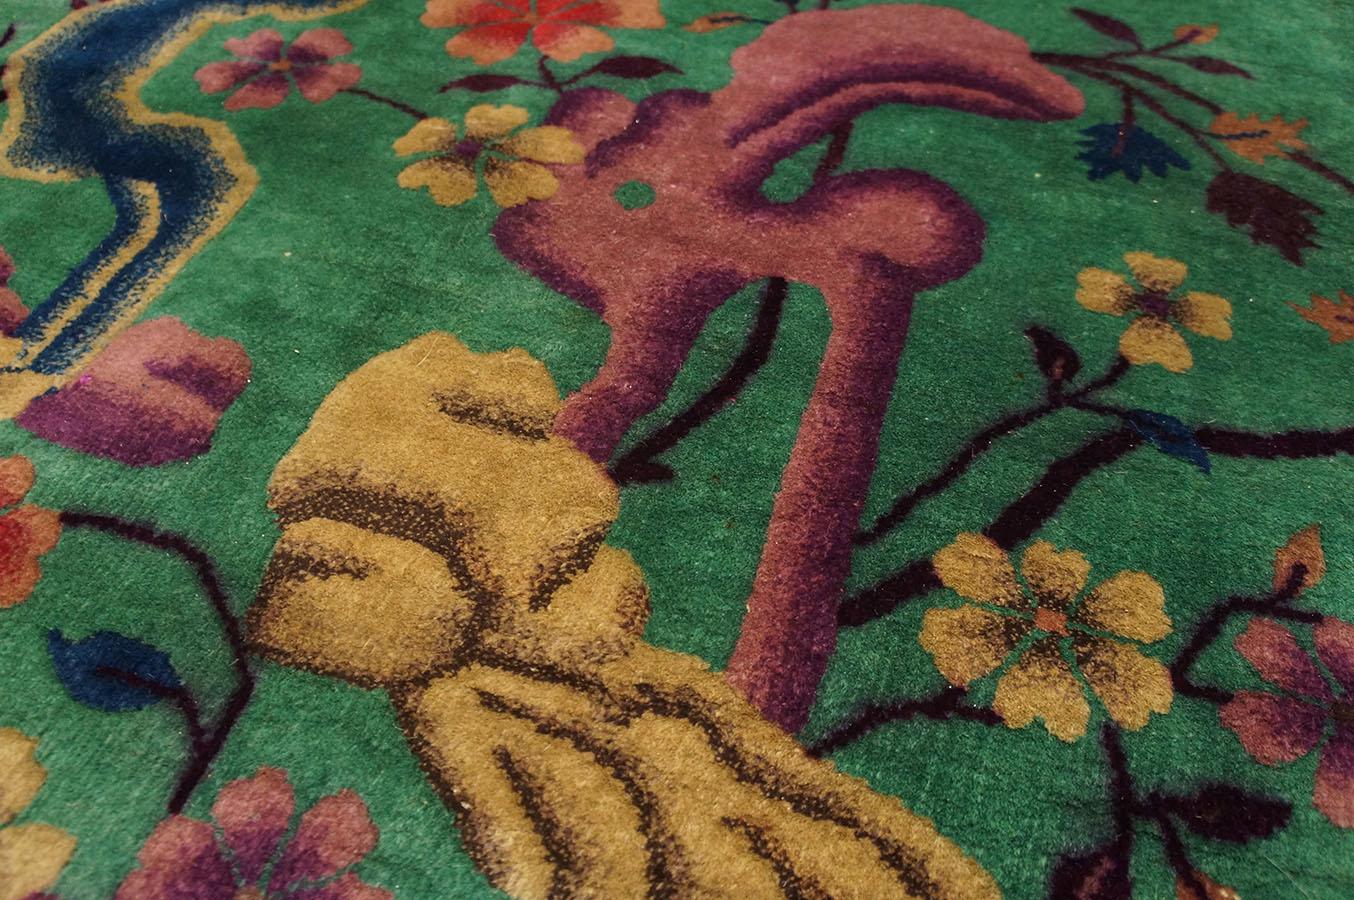 1920s Chinese Art Deco Carpet ( 9' x 11' 8'' - 275 x 355 cm ) For Sale 5